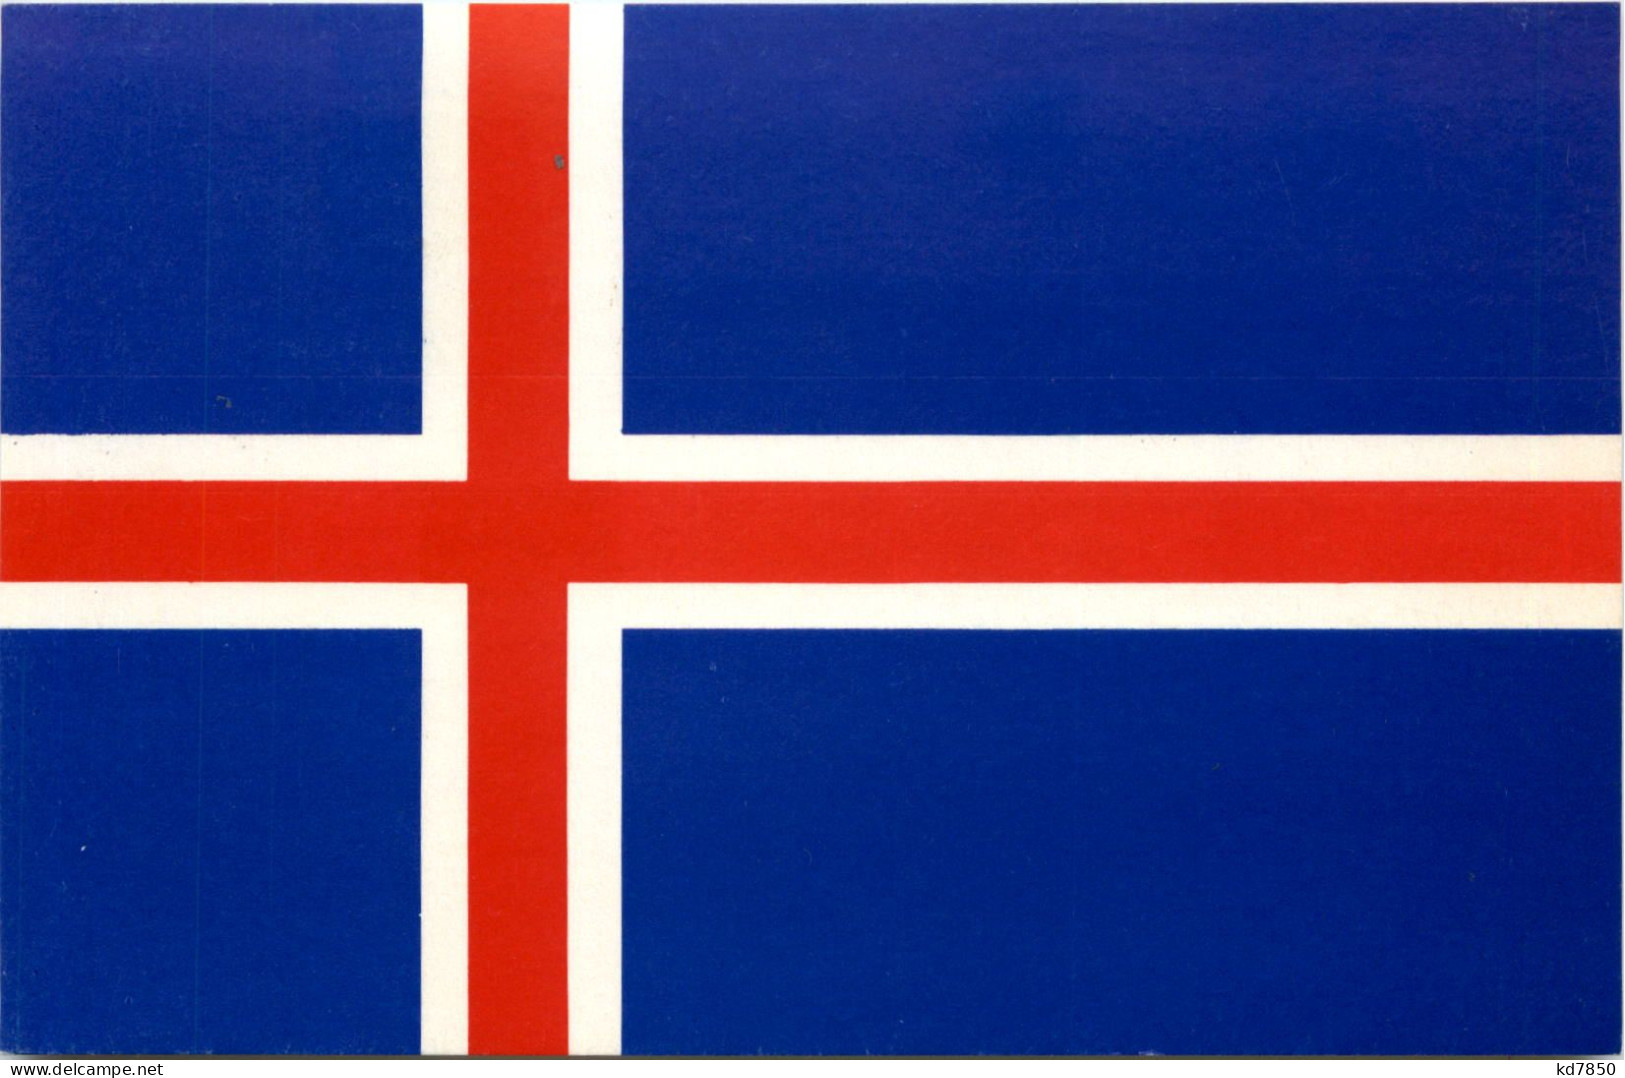 Iceland - Islandia